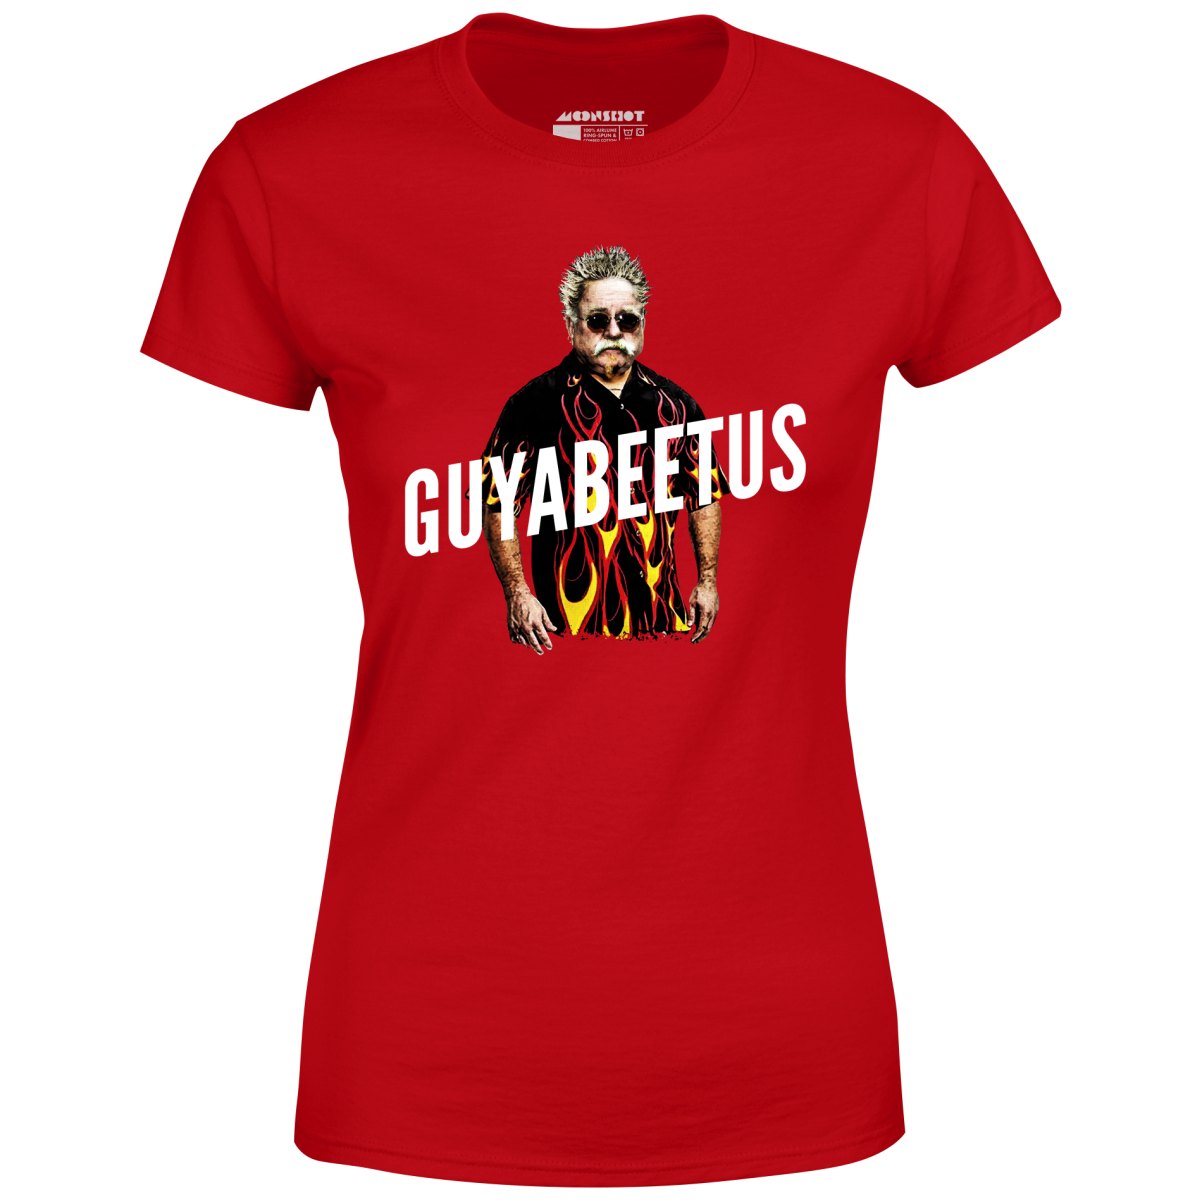 Guyabeetus - Women's T-Shirt